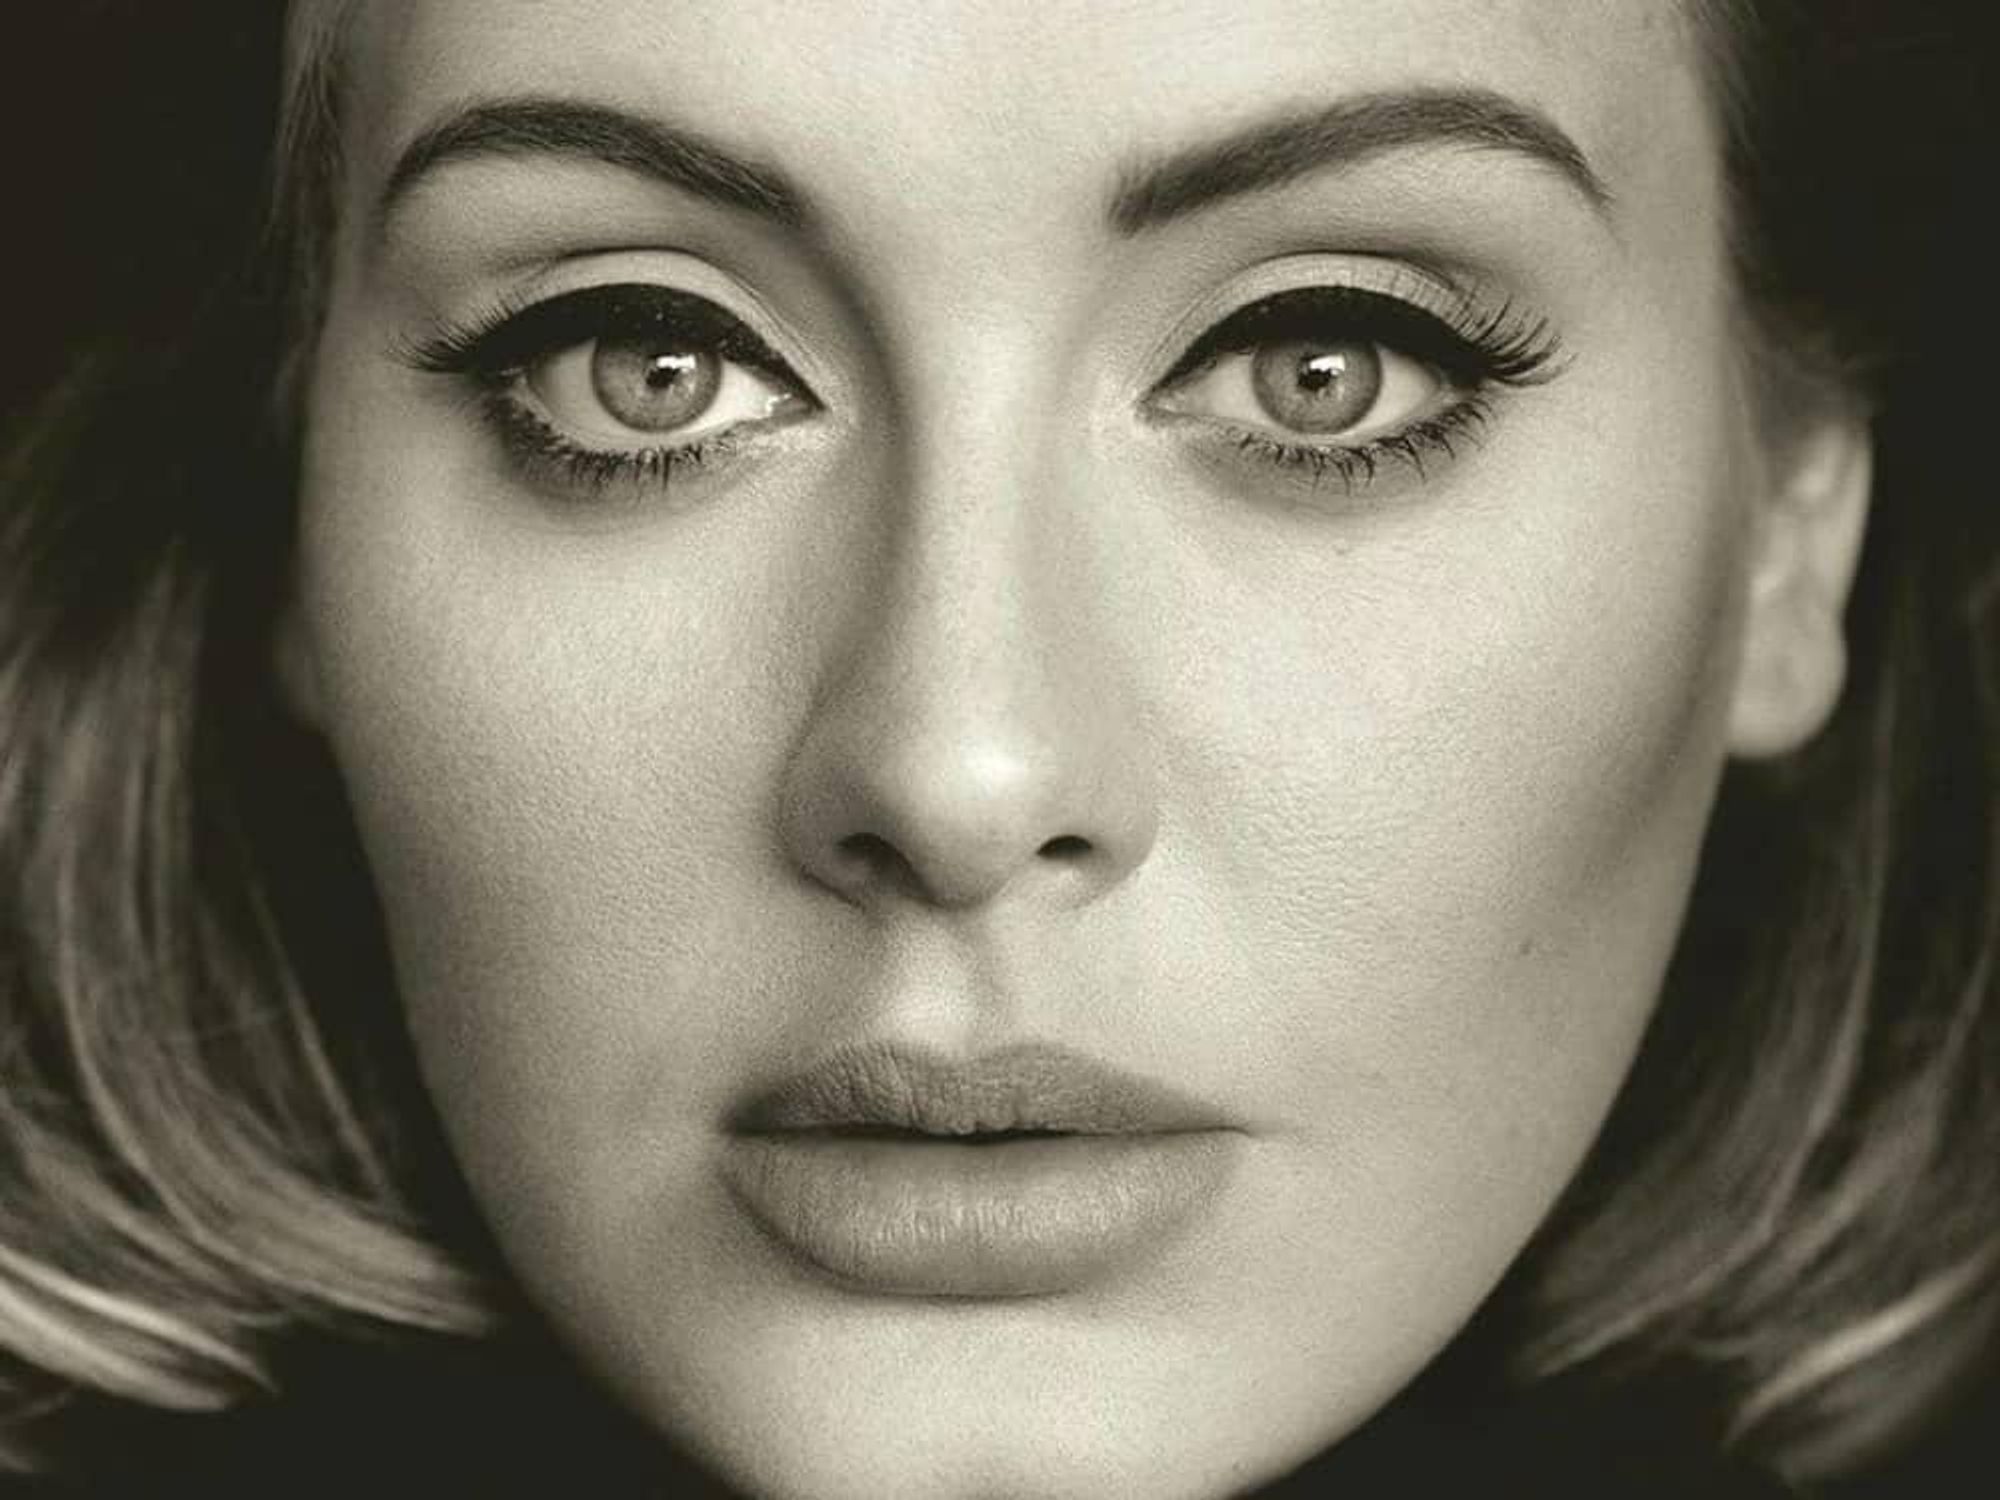 Adele singer 25 album 2015